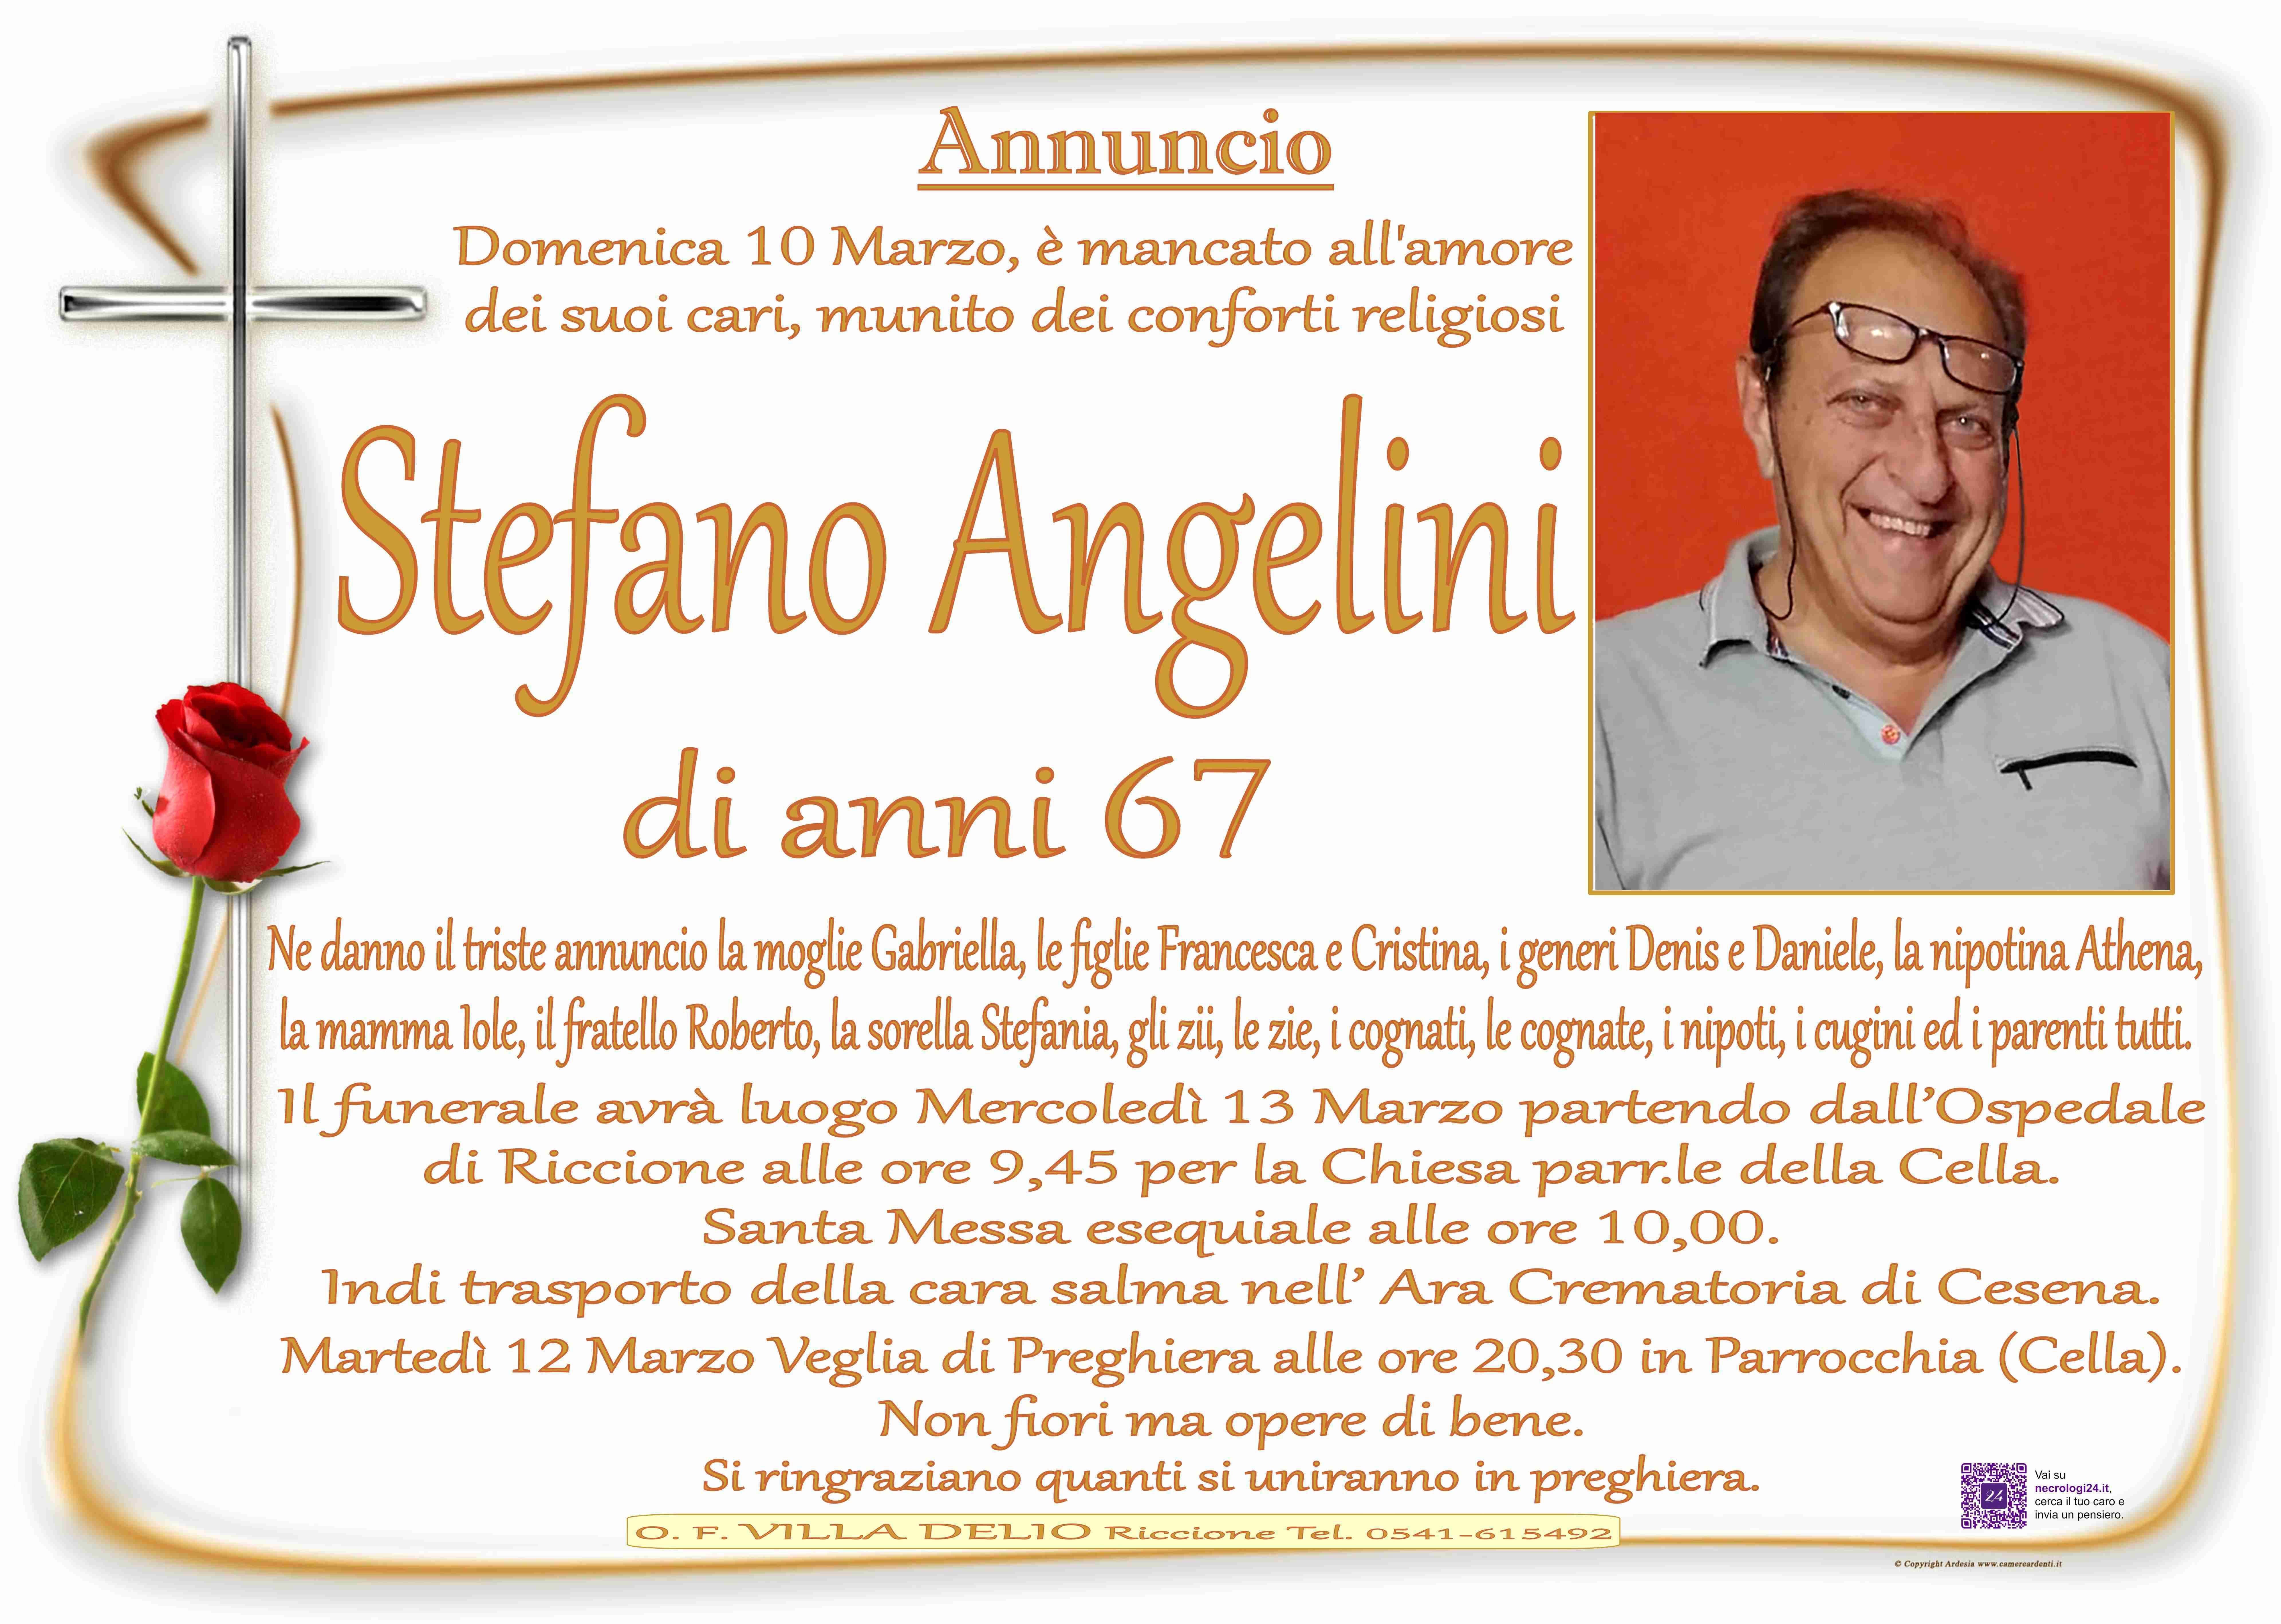 Stefano Angelini